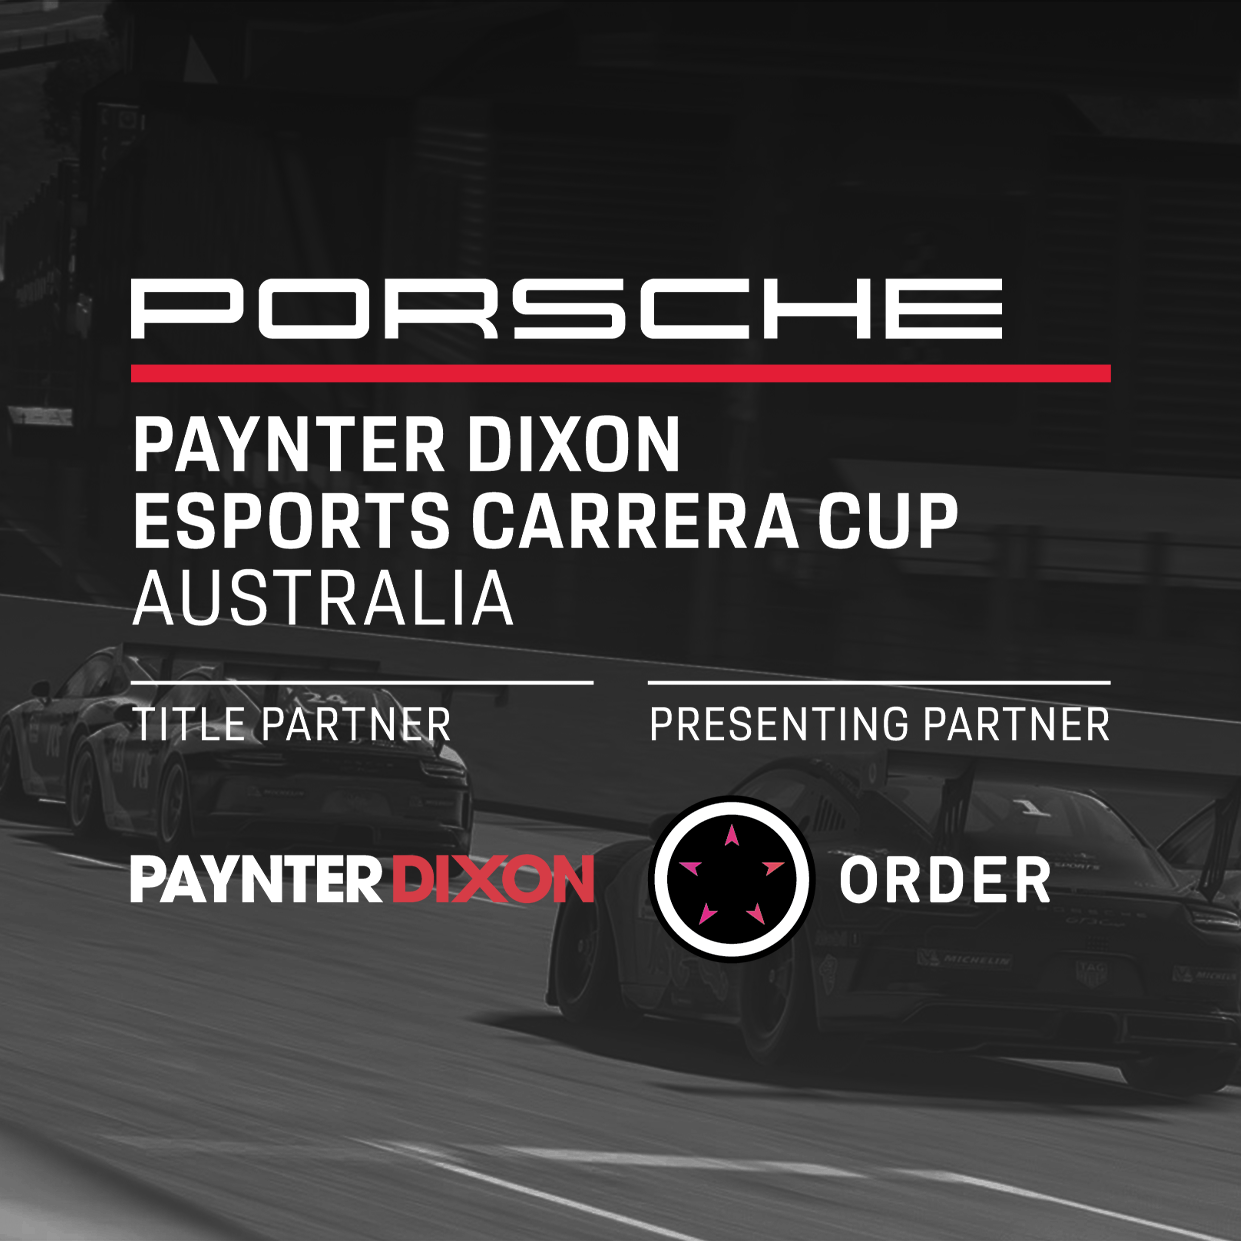 Porsche-Paynter-Dixon-Esports-Carrera-Cup